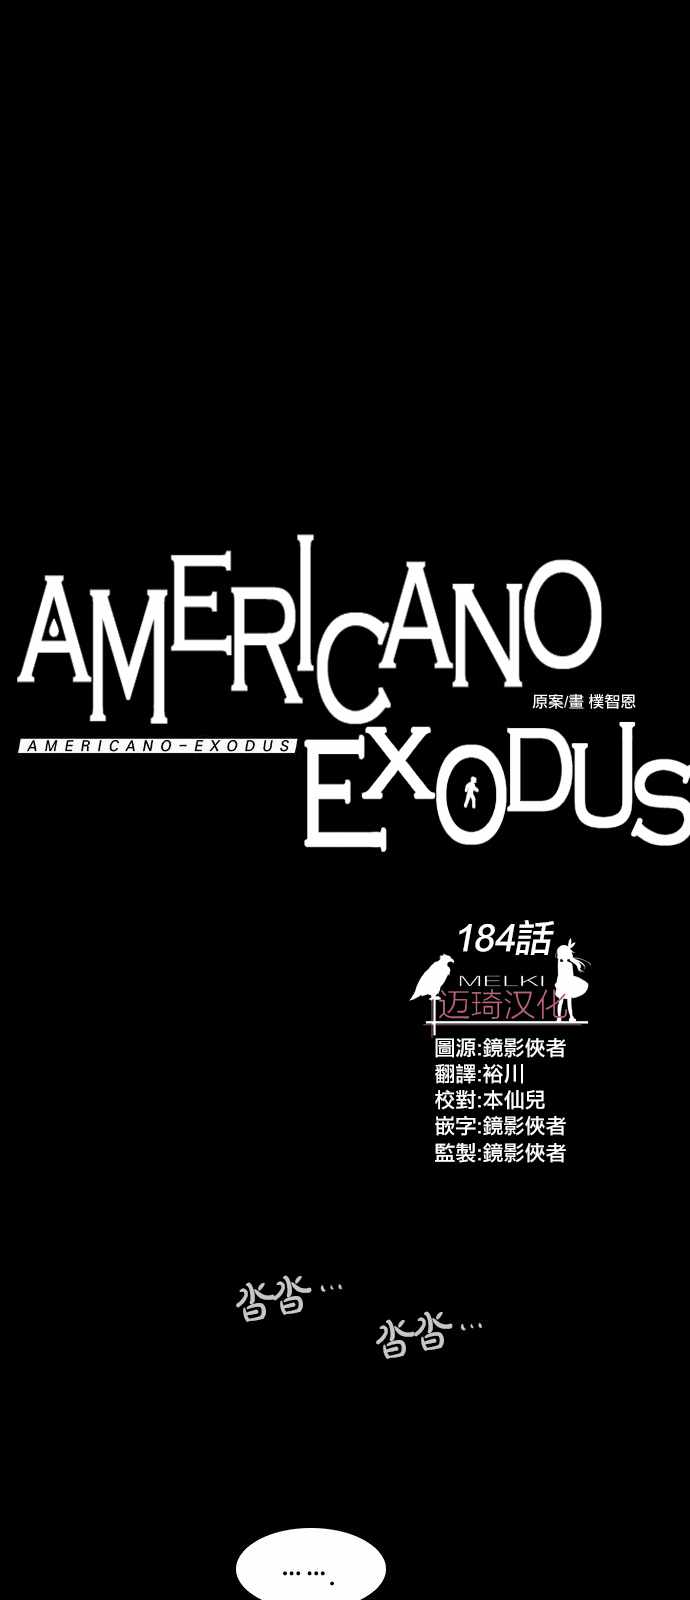 《Americano-exodus》漫画 exodus 184集